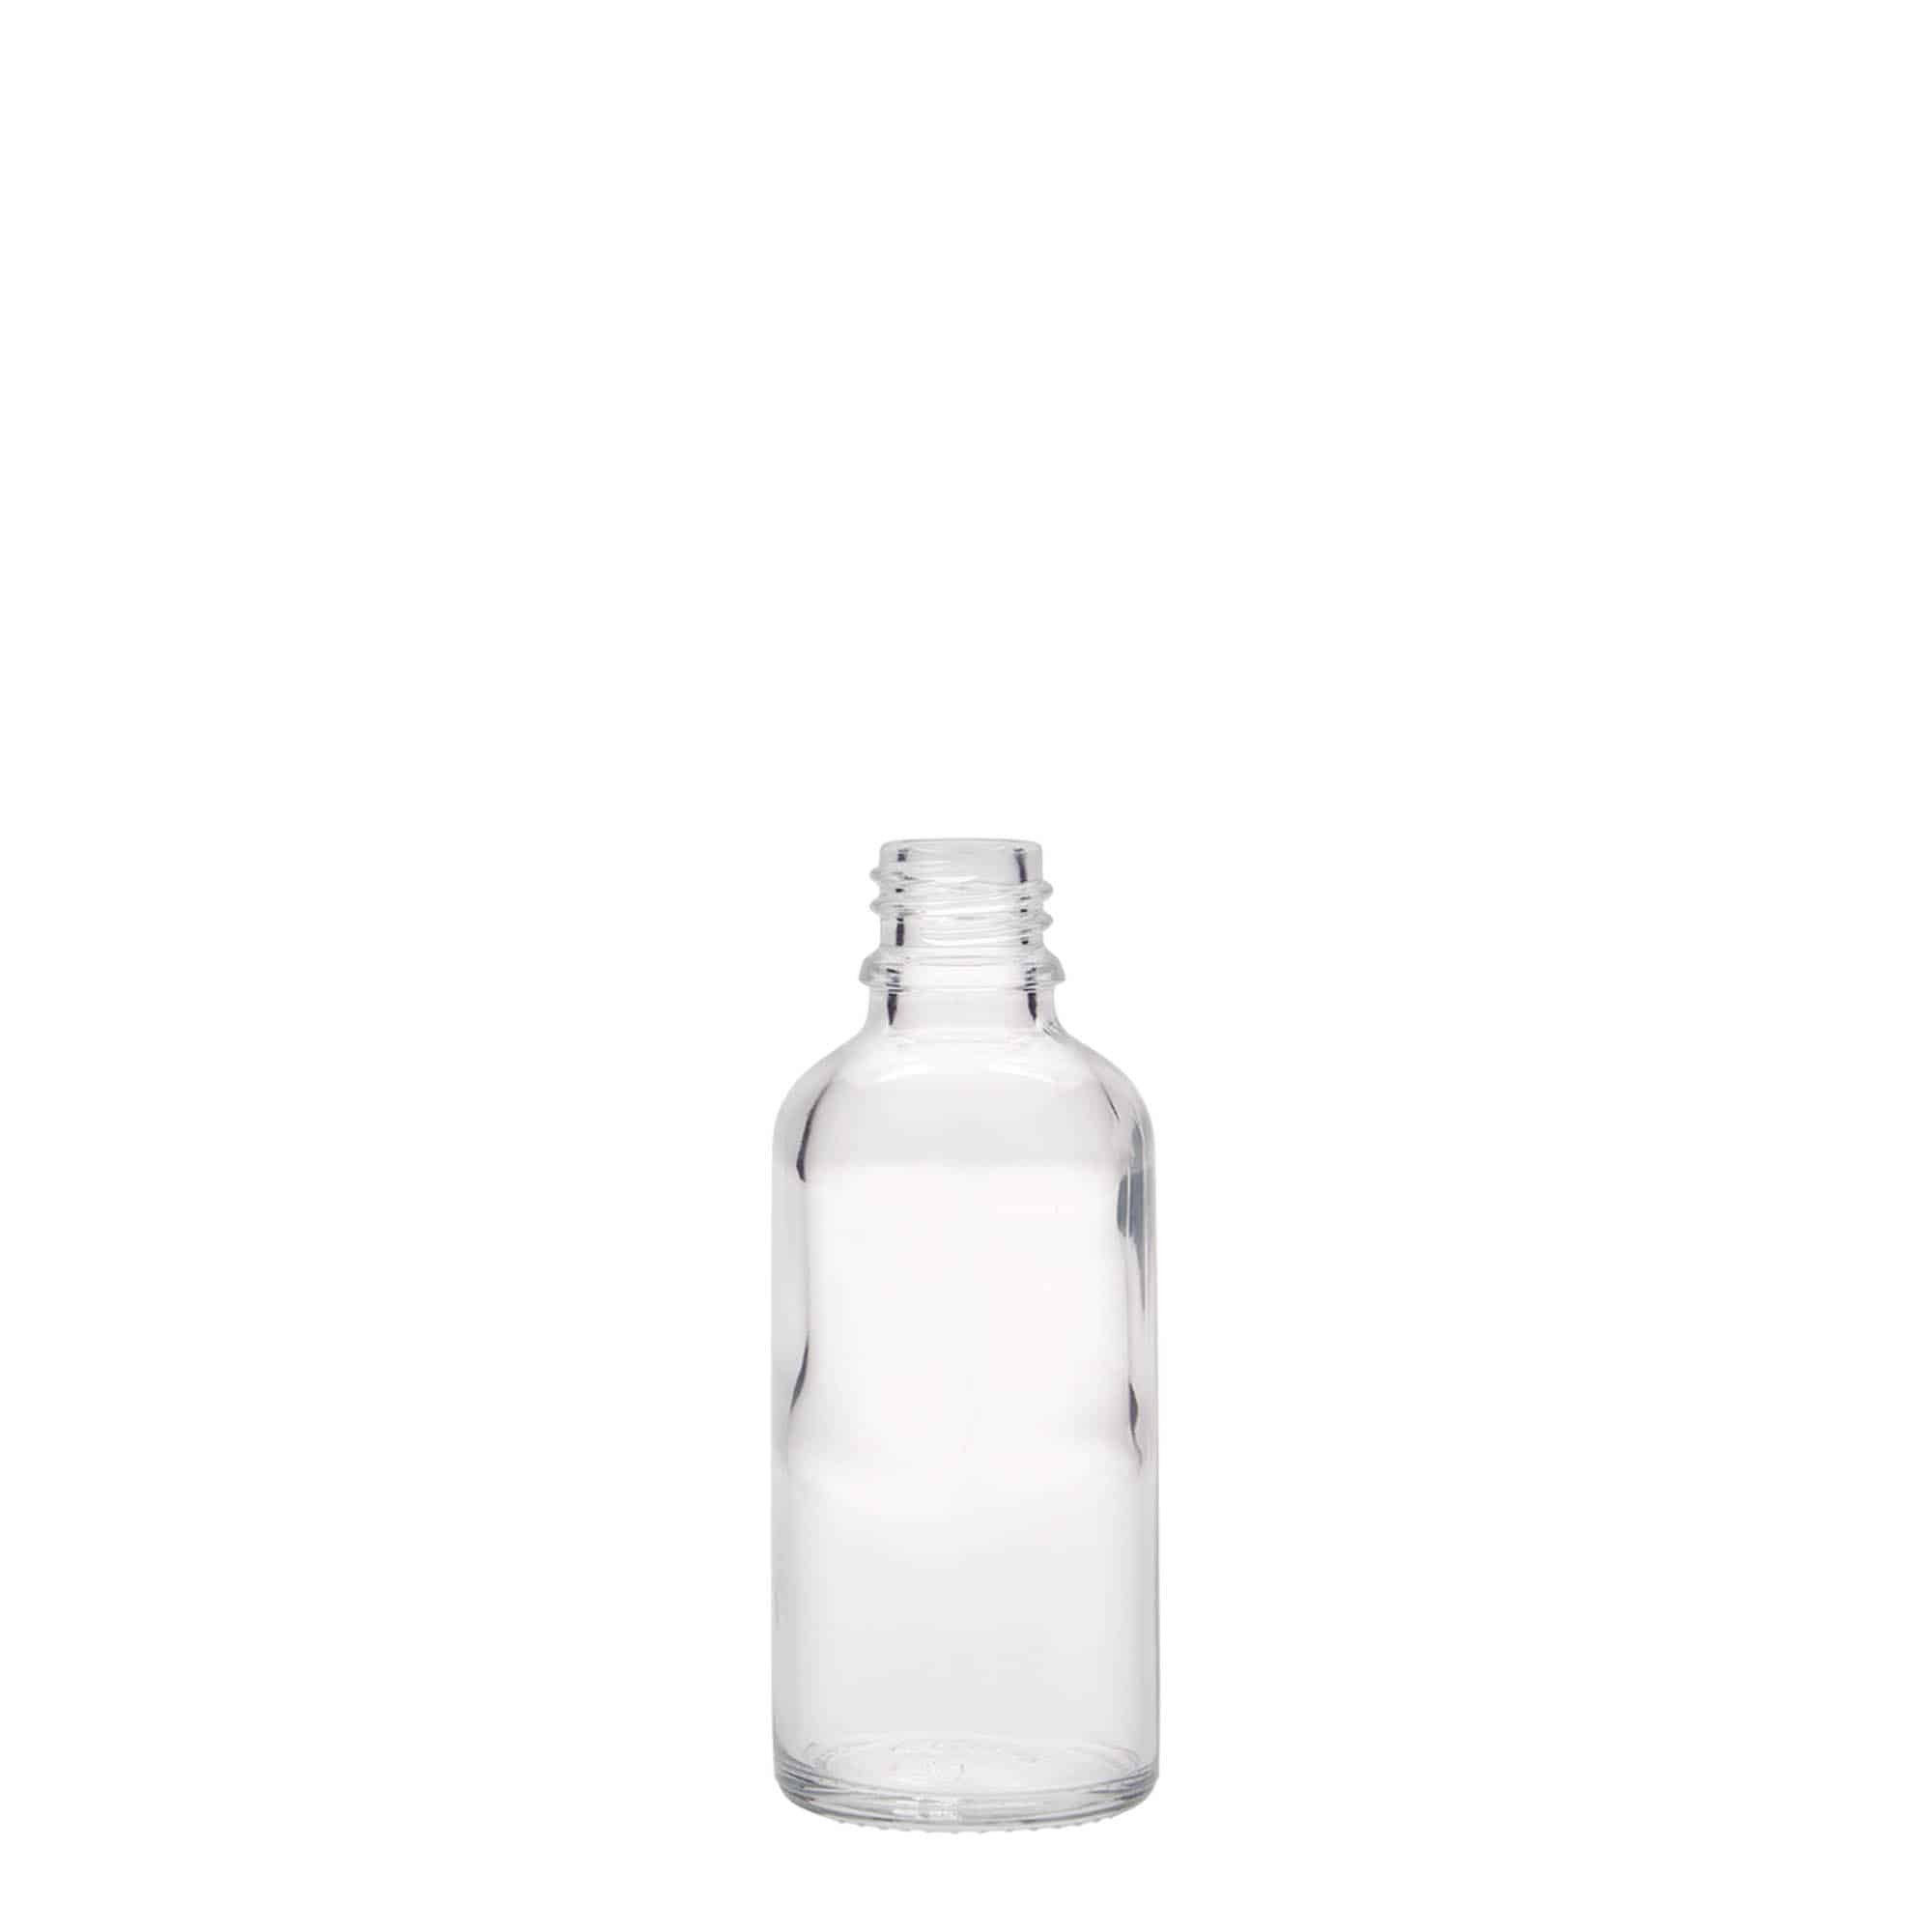 50 ml medicine bottle, glass, closure: DIN 18